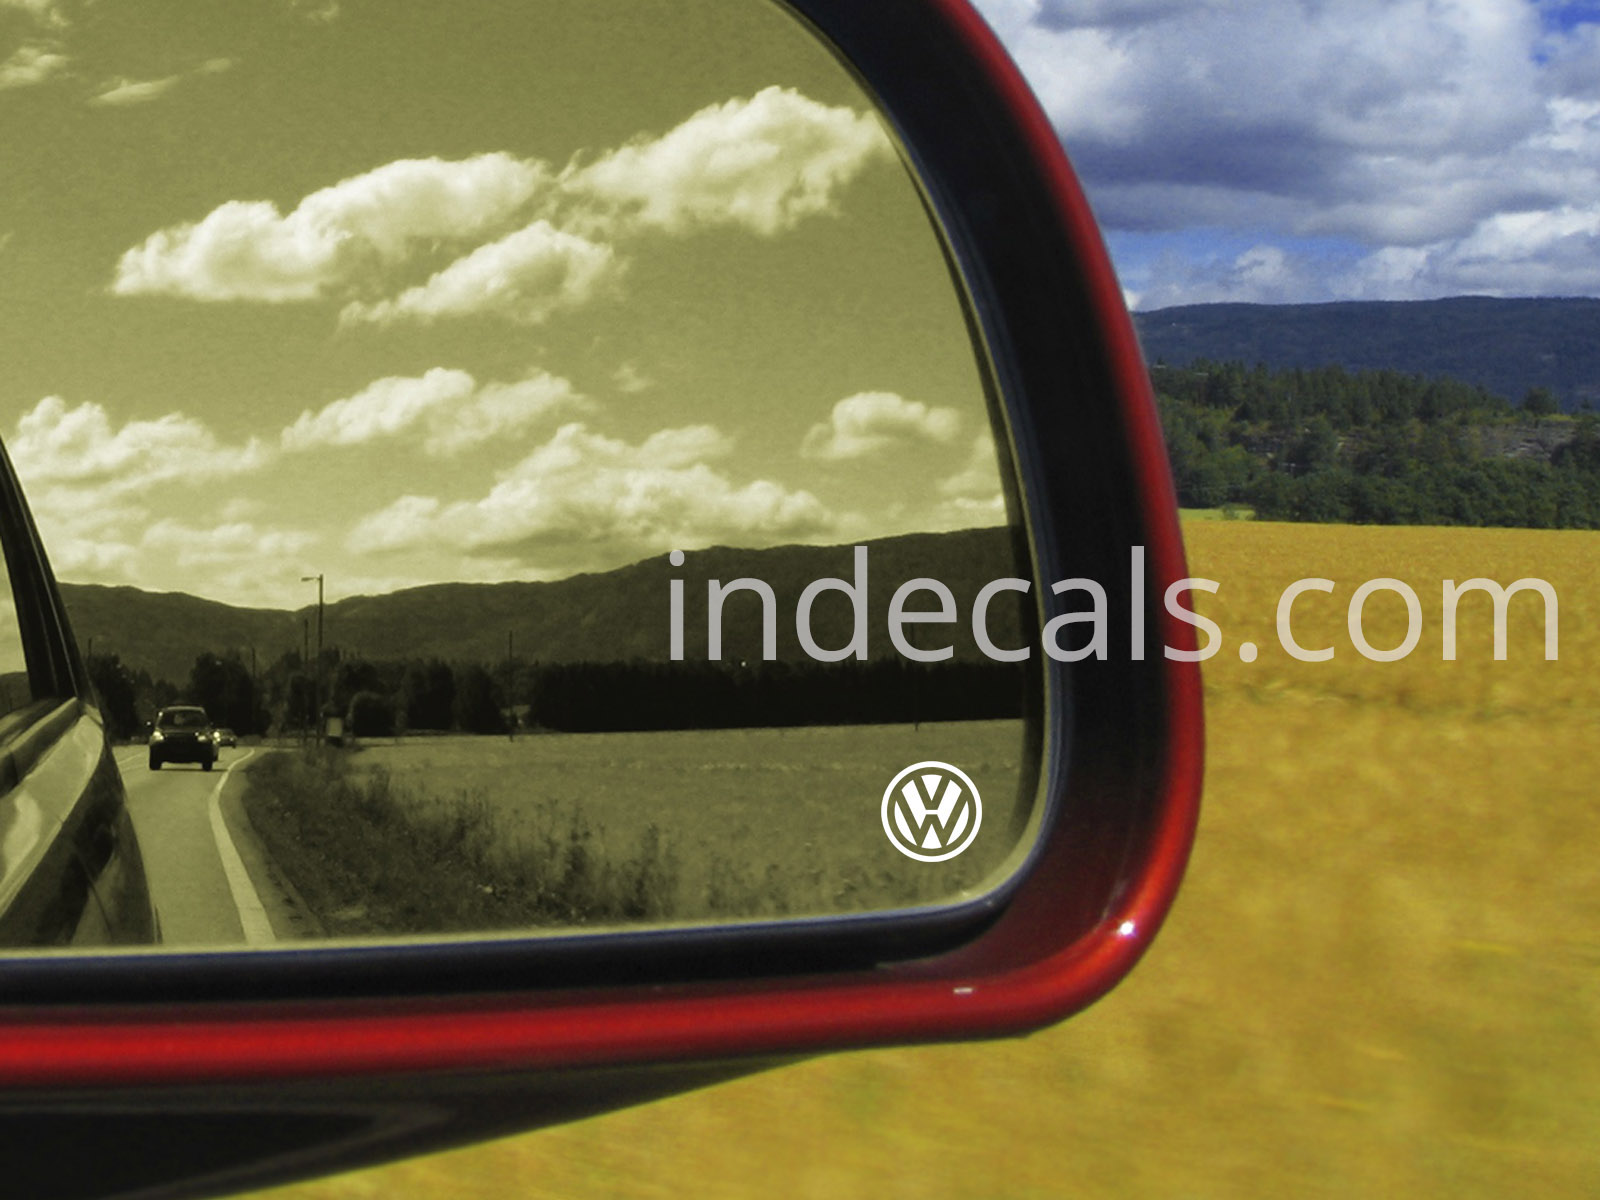 3 x Volkswagen Stickers for Mirror Glass - White